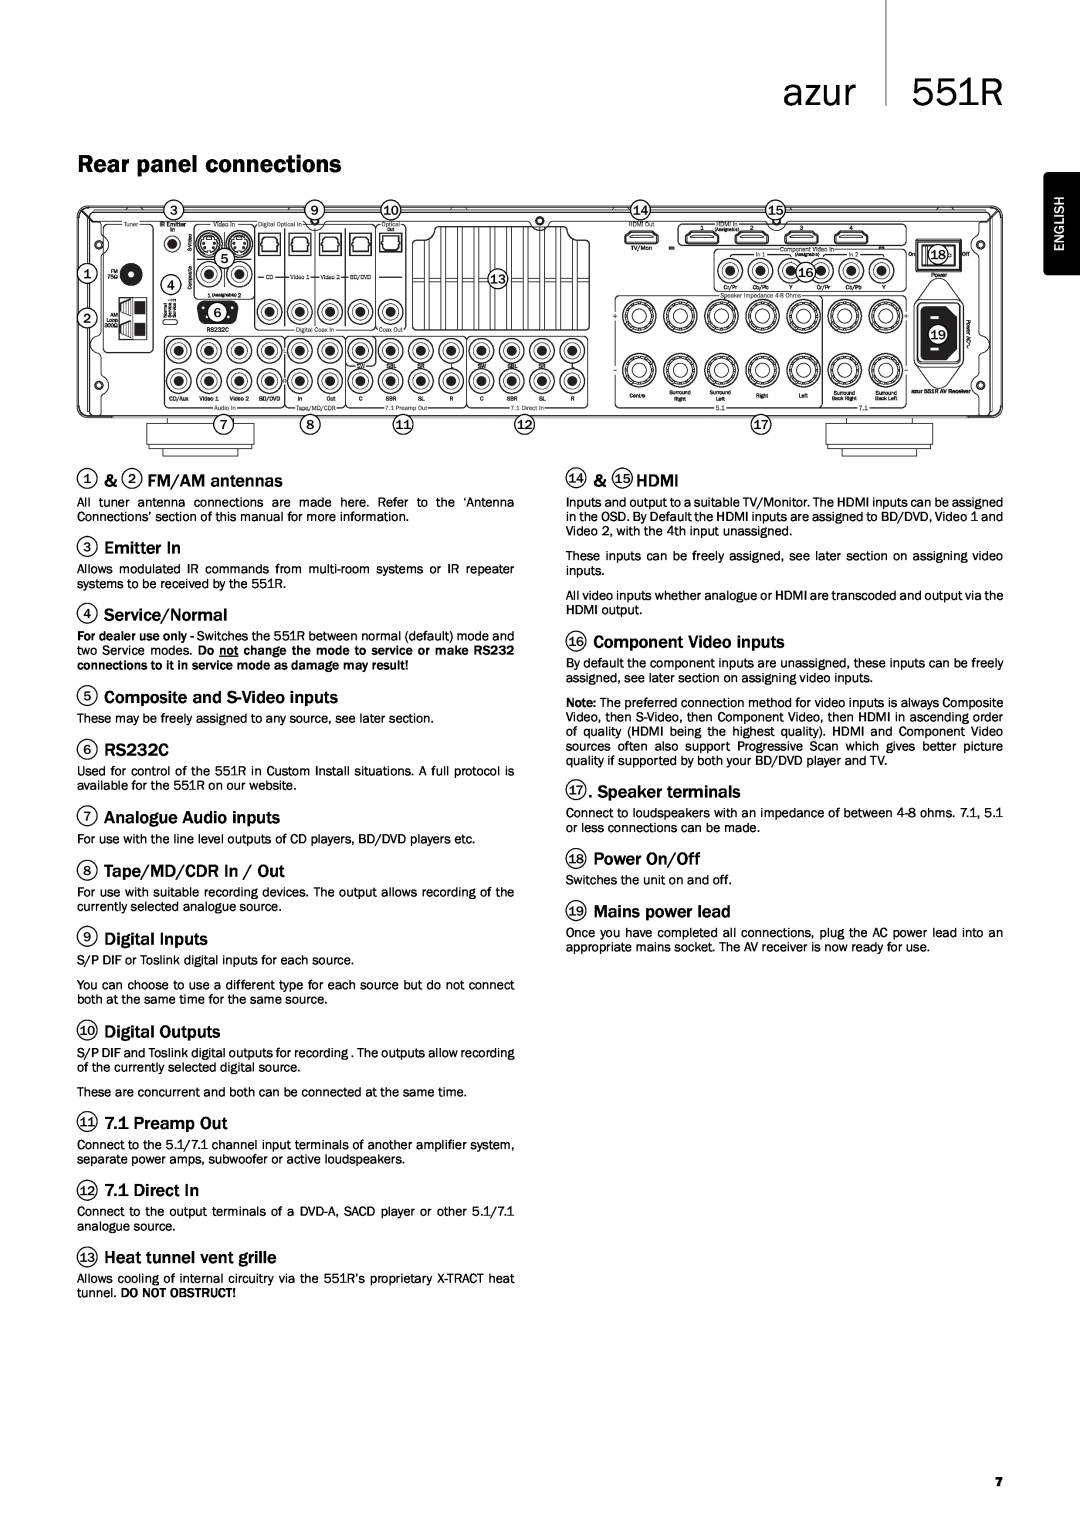 Cambridge Audio 551R user manual Rearpanelconnections, azur 